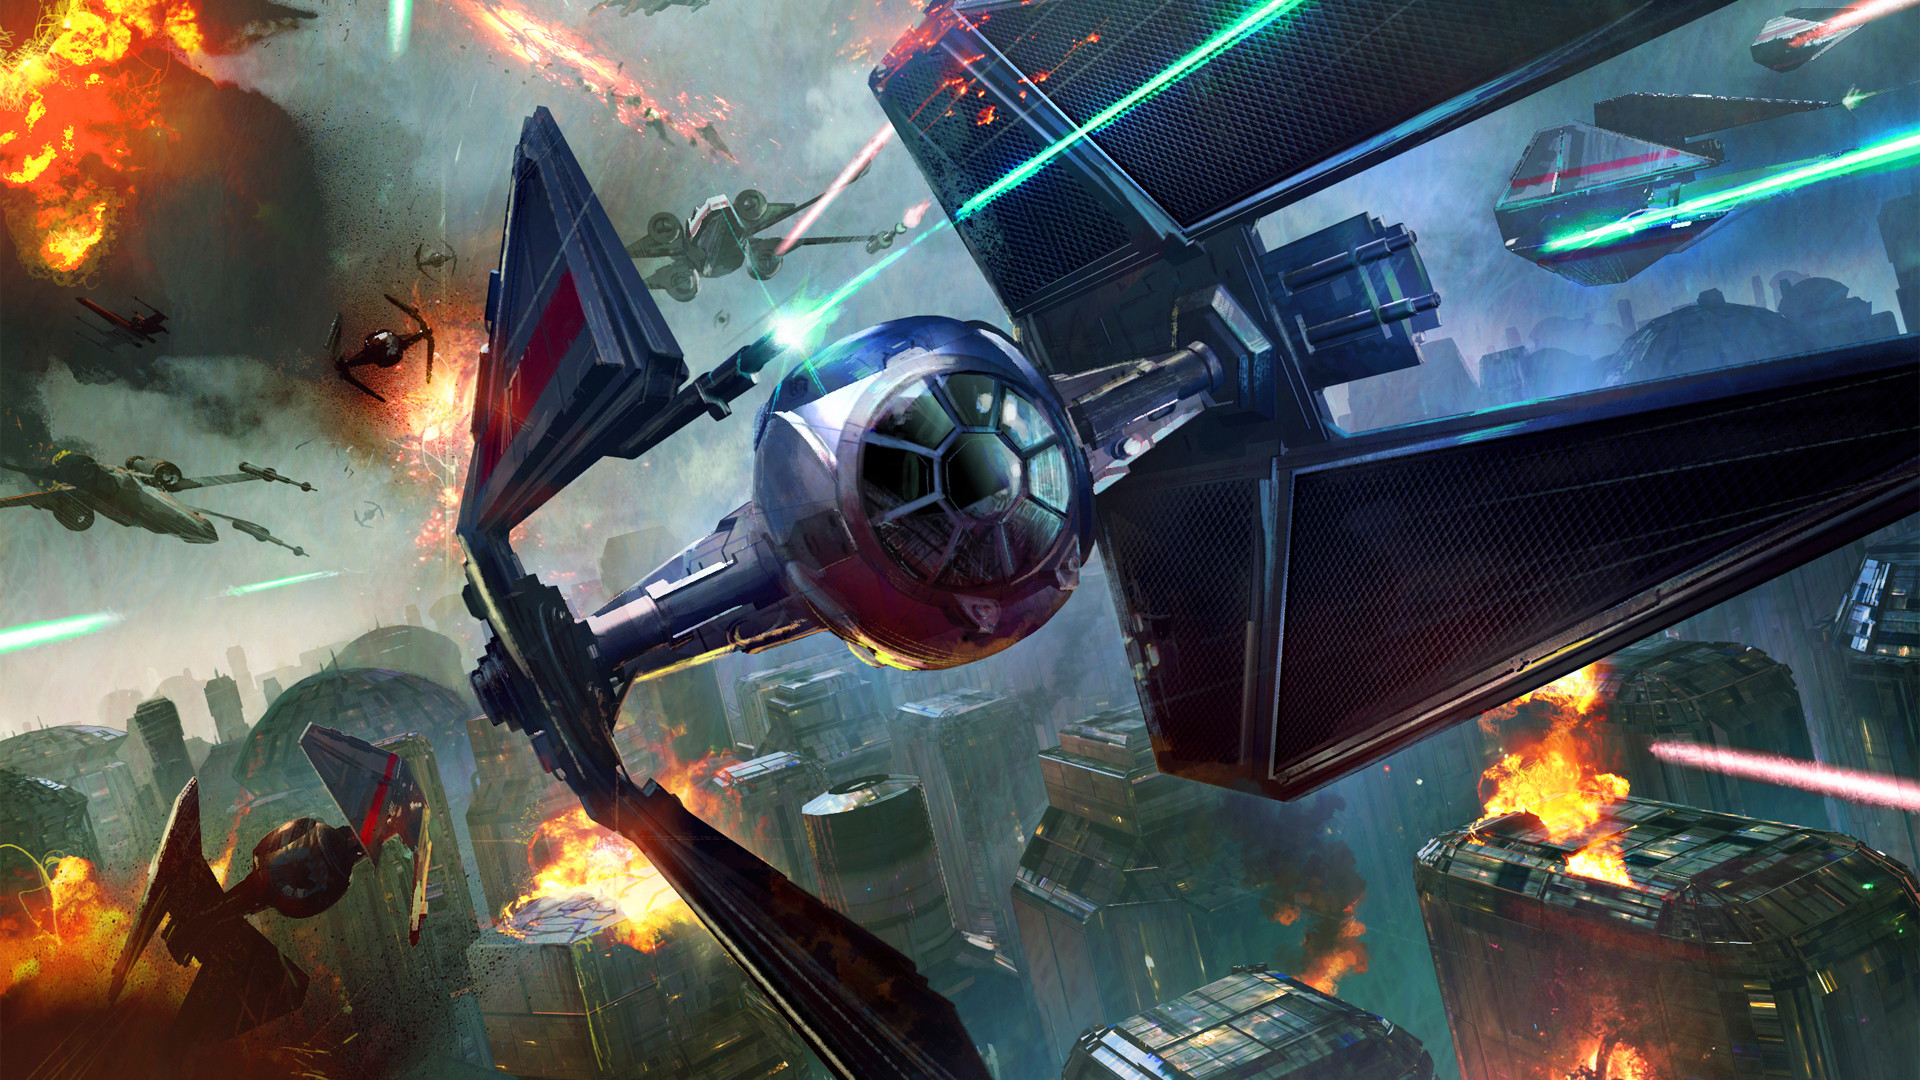 Star Wars Space Battle Wallpaper Images